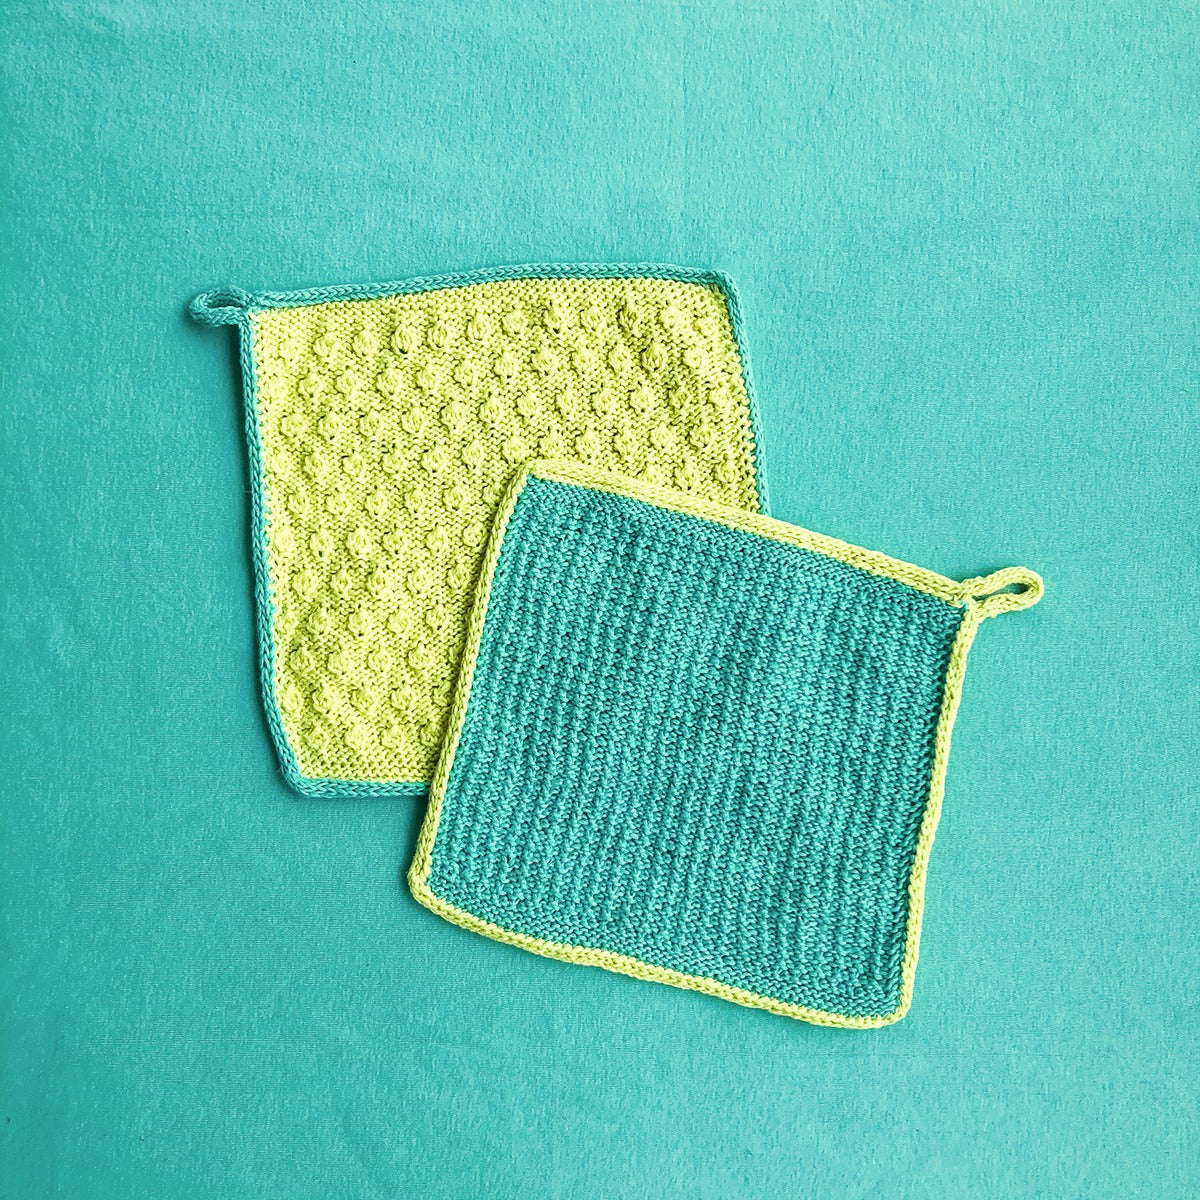 Kelbourne Woolens Kits Year of Gifts Kit - June Pantry Staple Washcloths